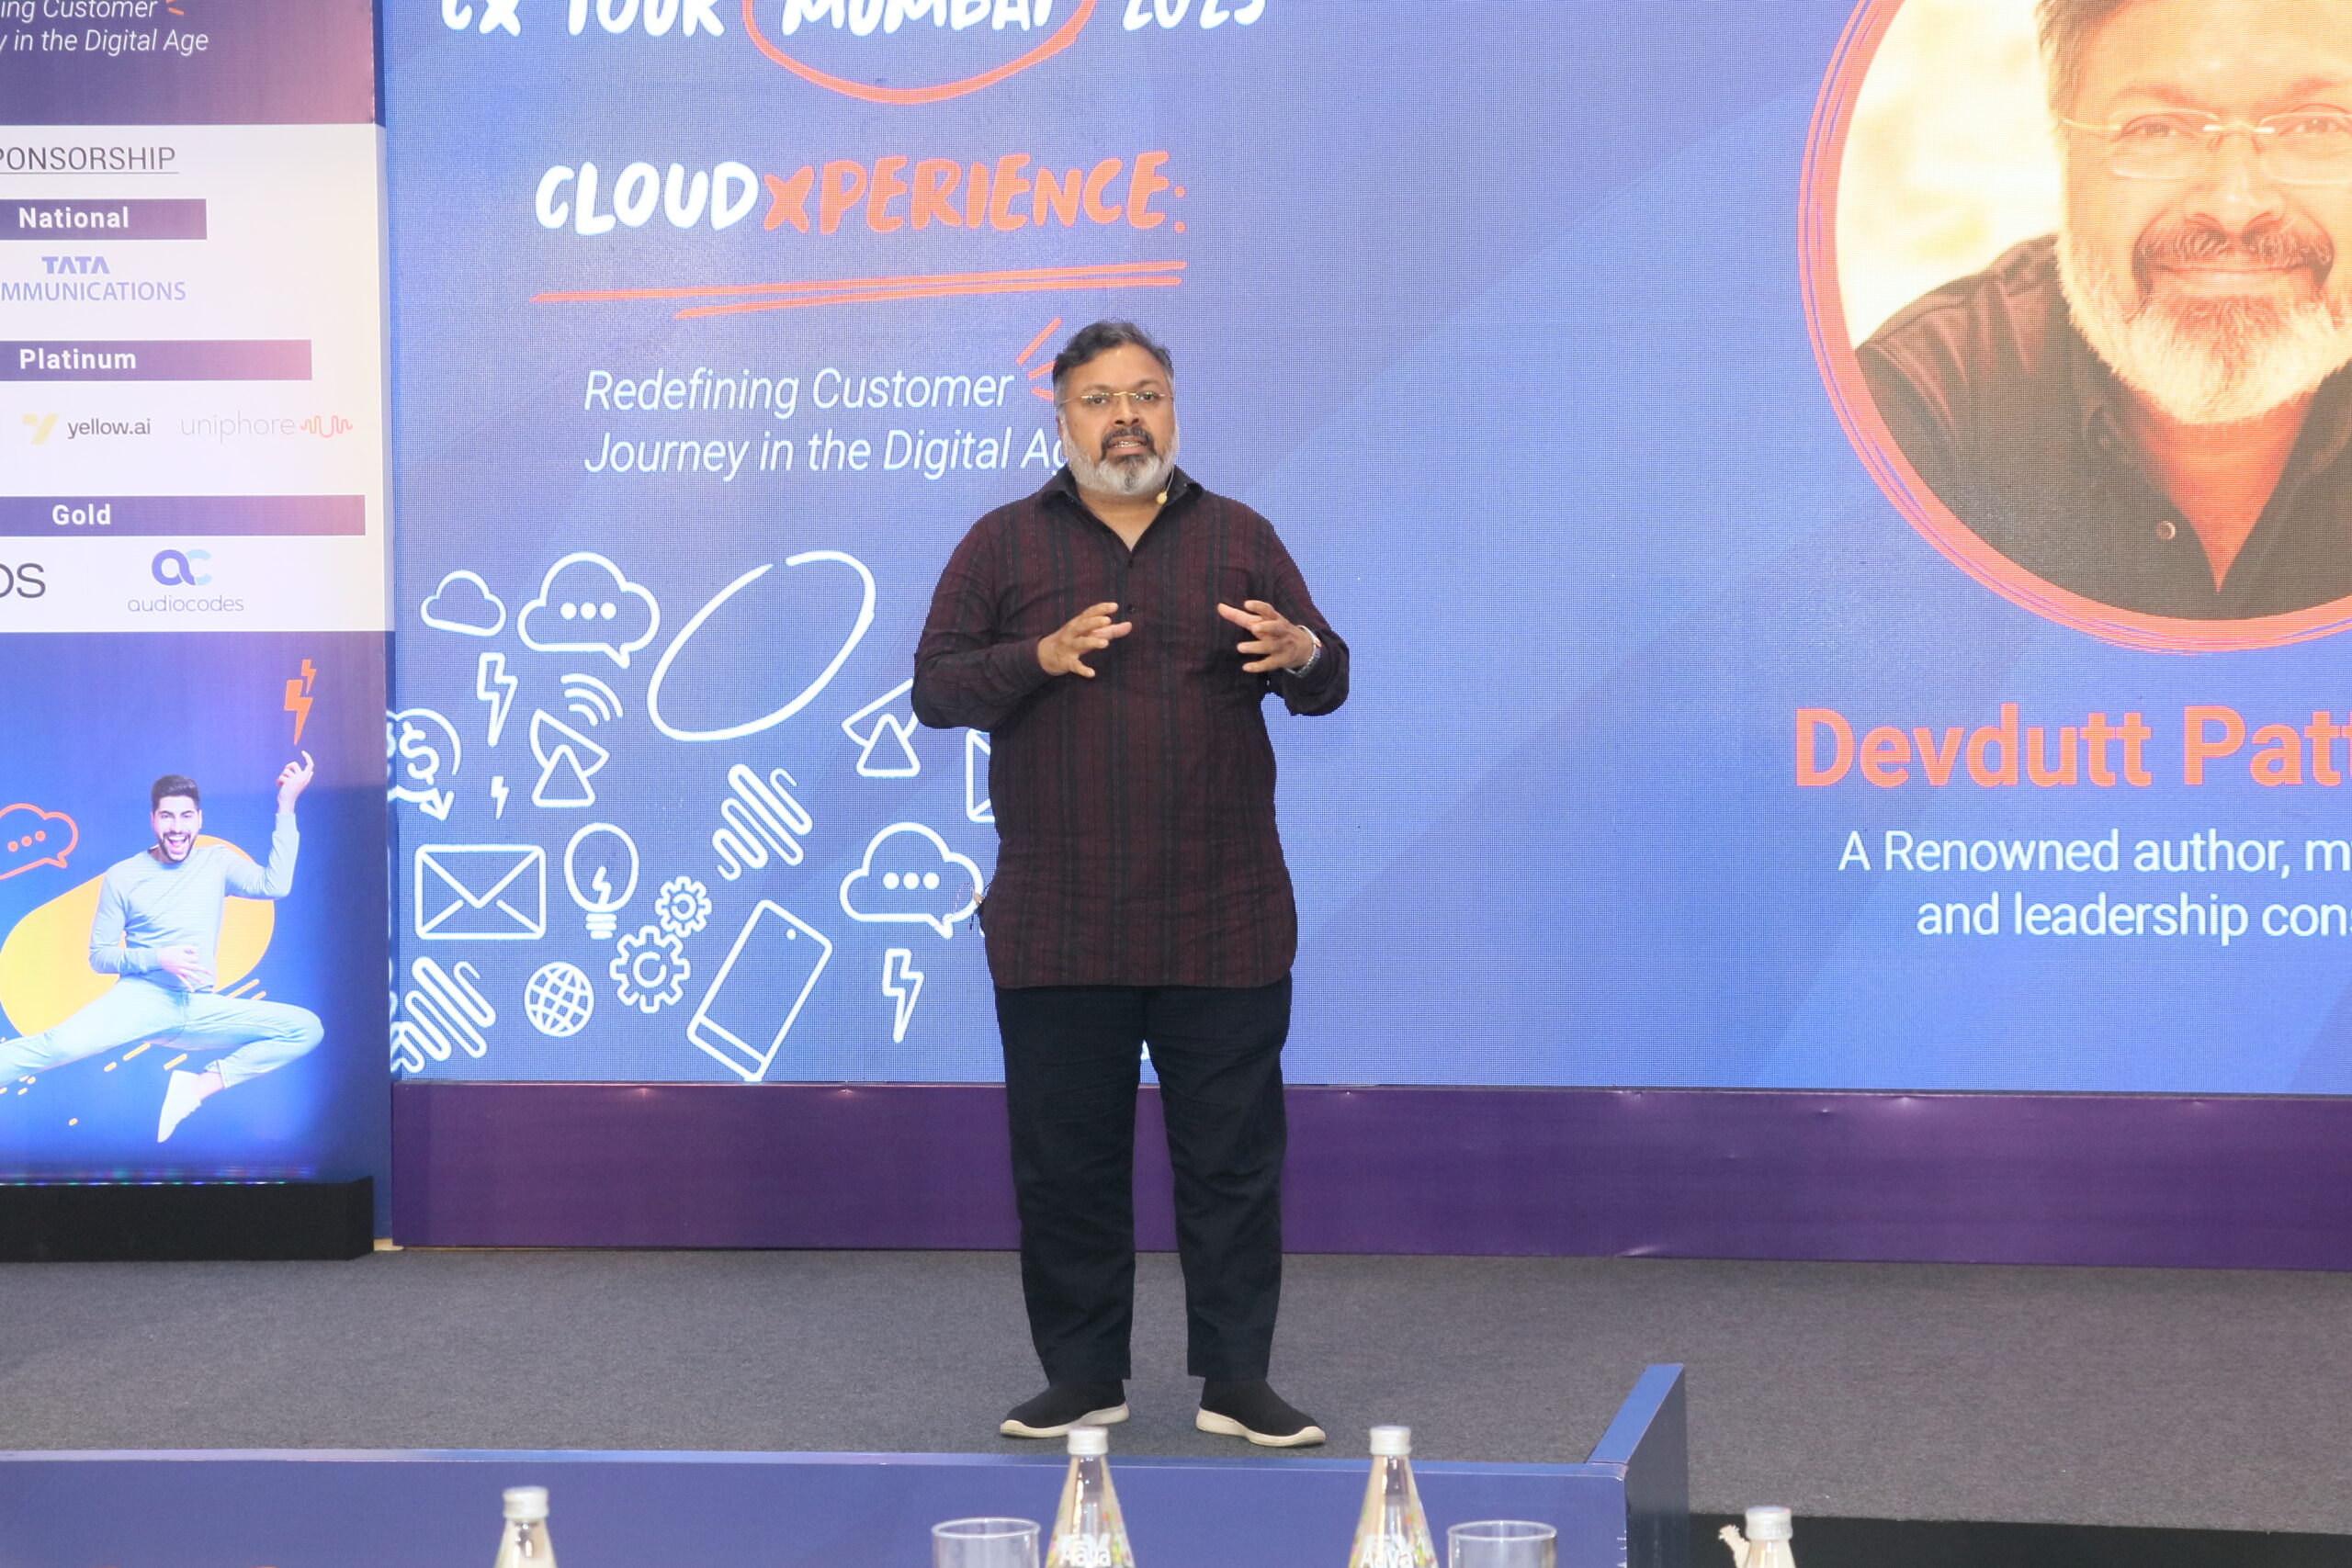 Devdutt Pattanaik as a guest speaker at a corporate event in Mumbai